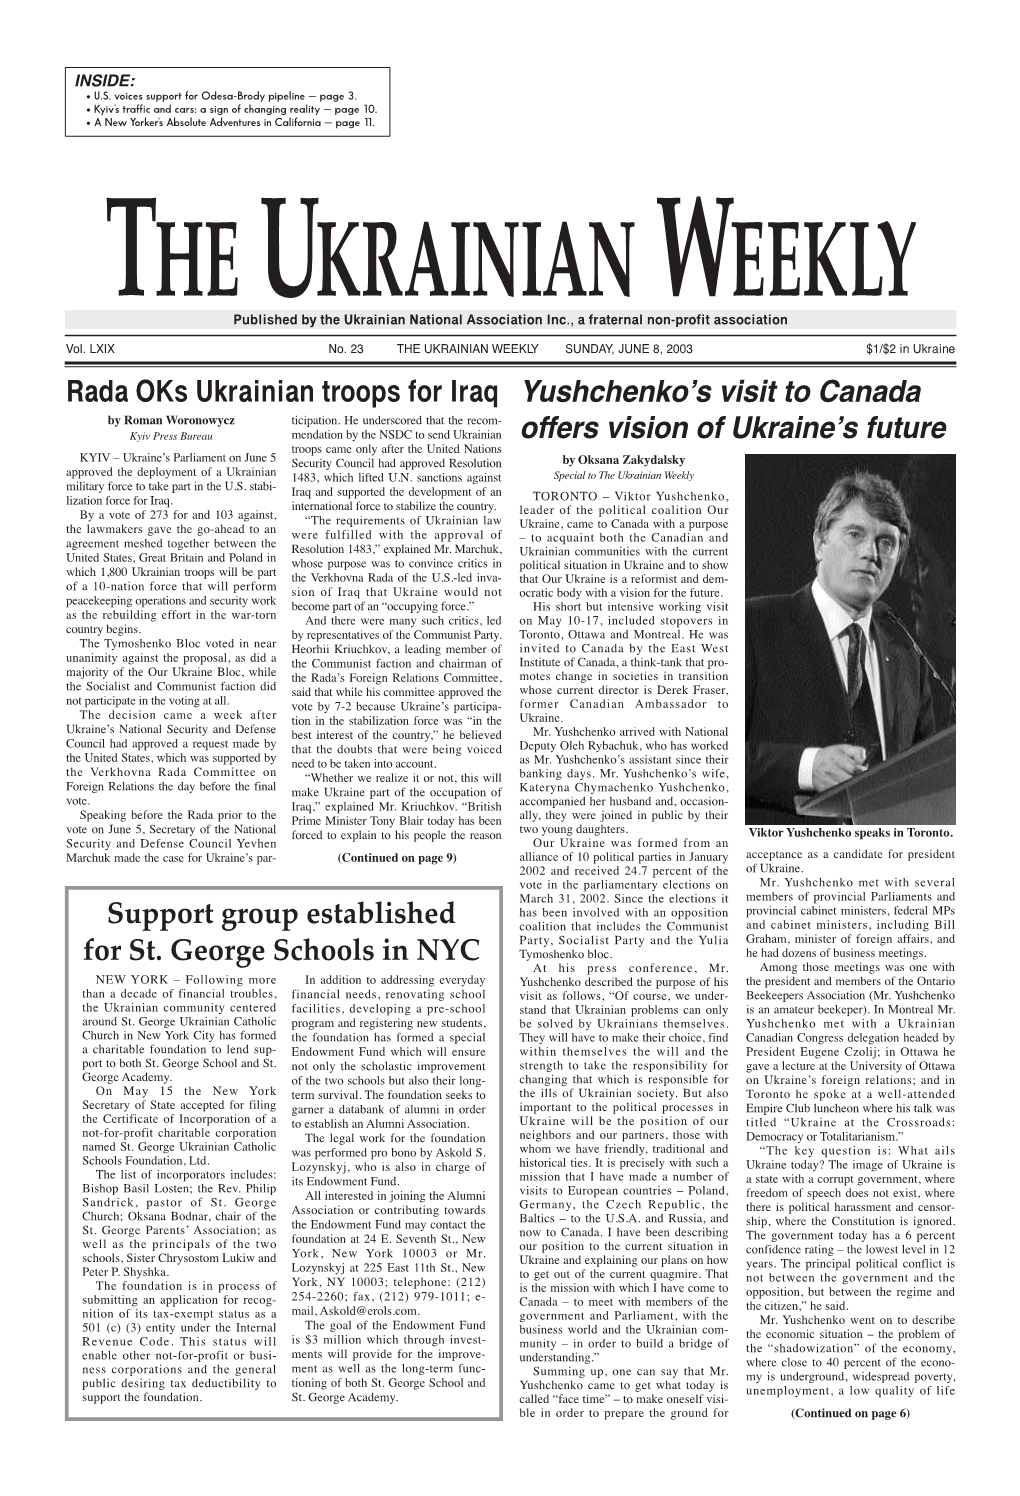 The Ukrainian Weekly 2003, No.23